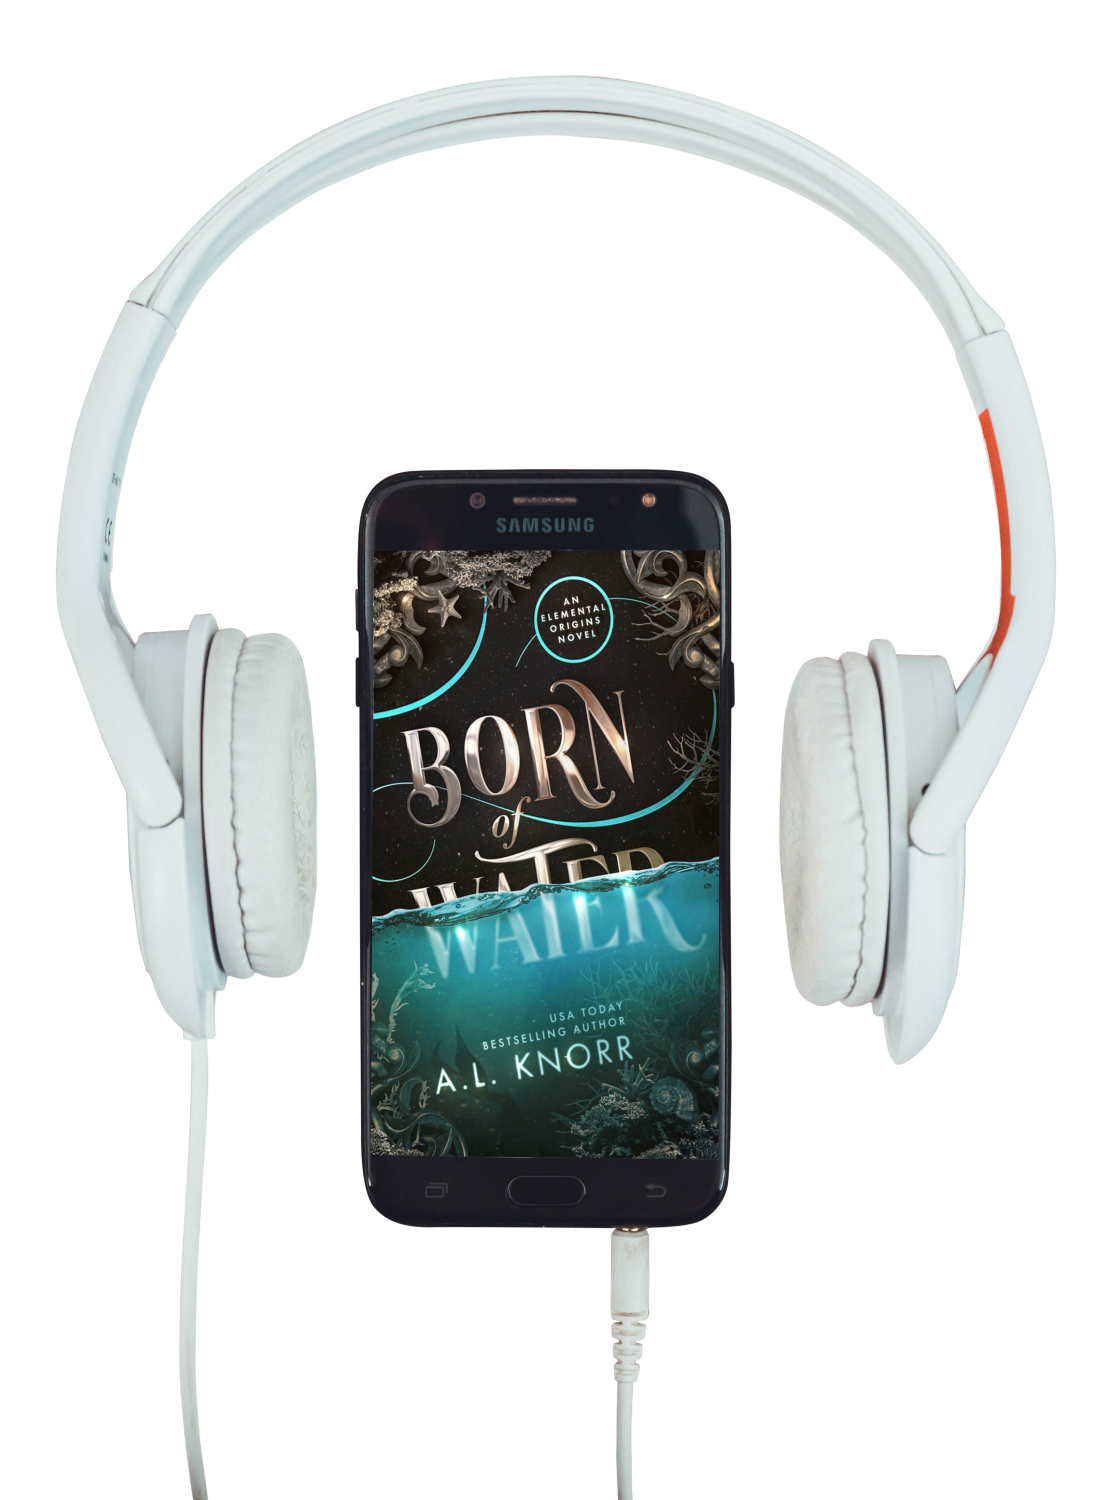 Born of Water audiobook graphic with headphones